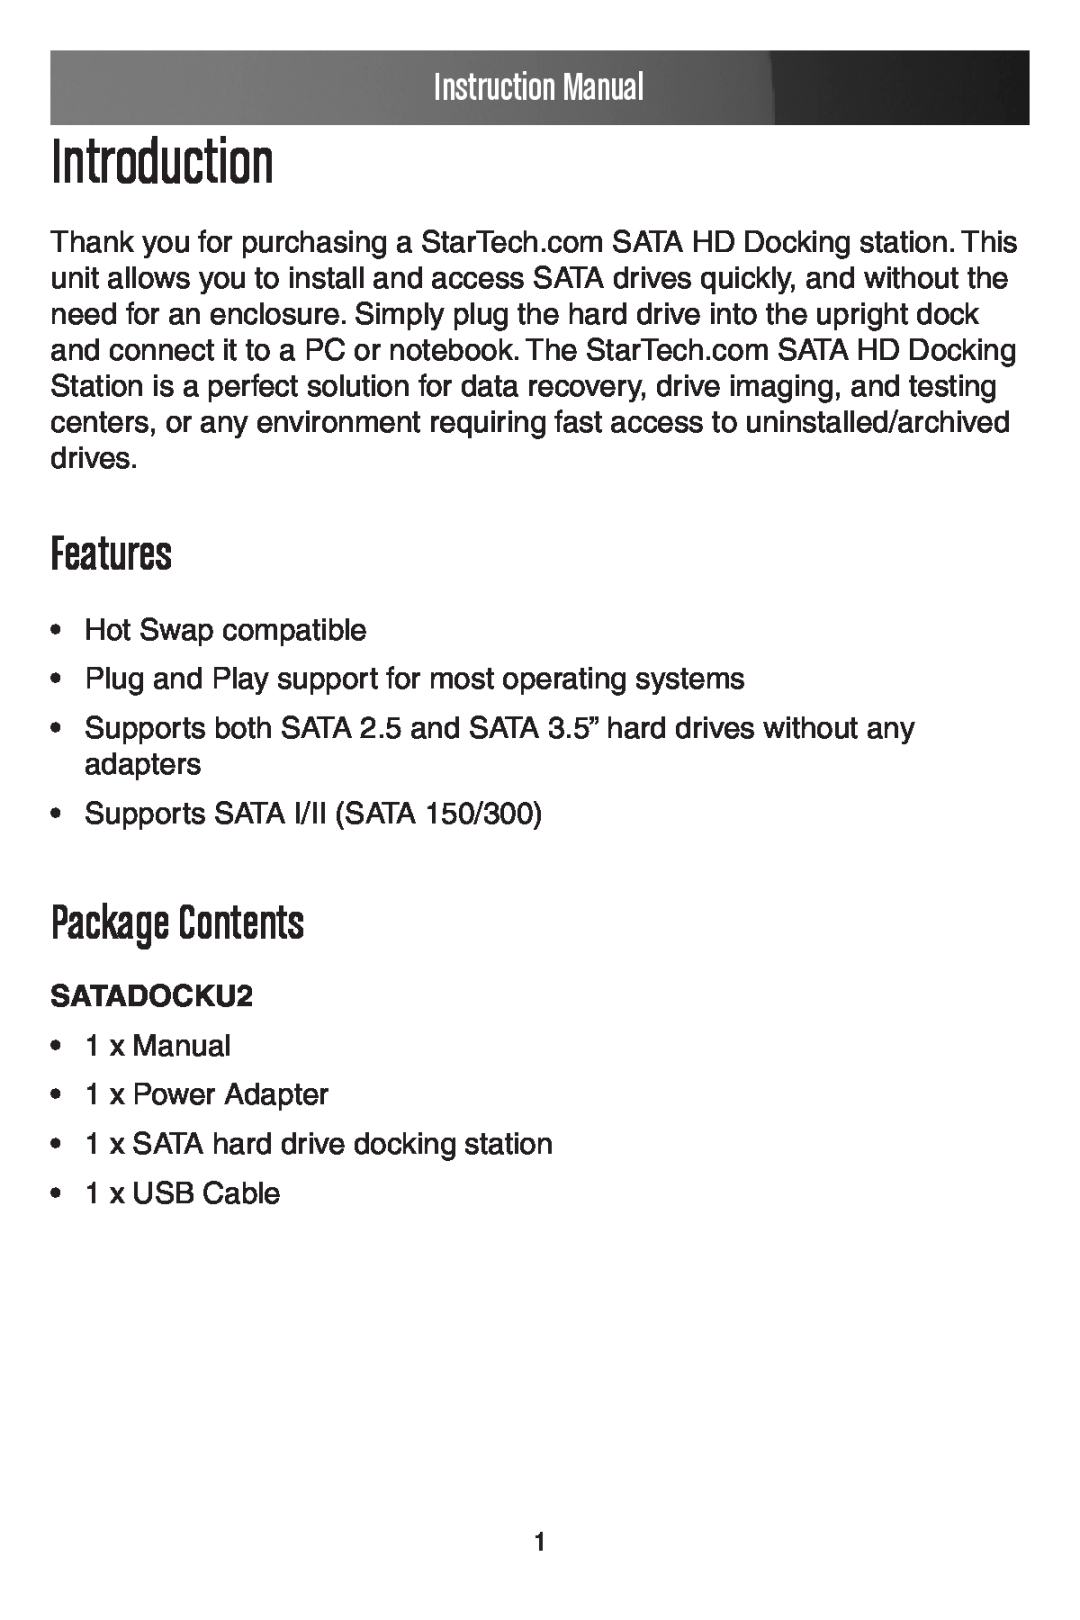 StarTech.com SATADOCKU2 instruction manual Introduction, Features, Package Contents, Instruction Manual 